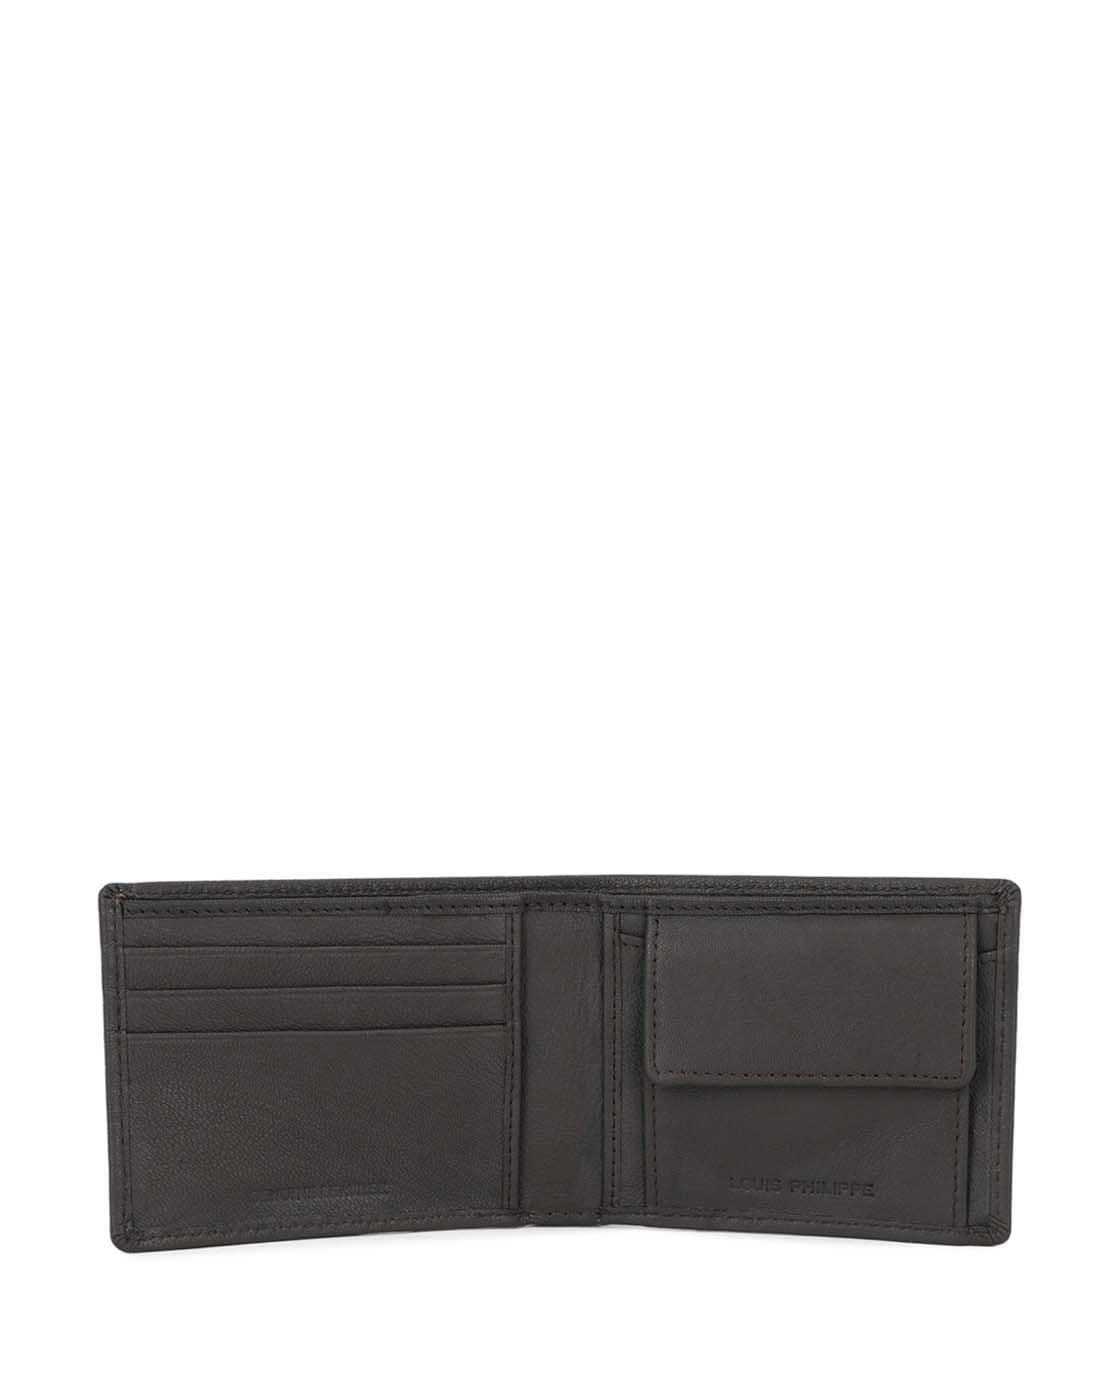 Buy Men Black Print Leather Wallet Online - 674650 | Louis Philippe